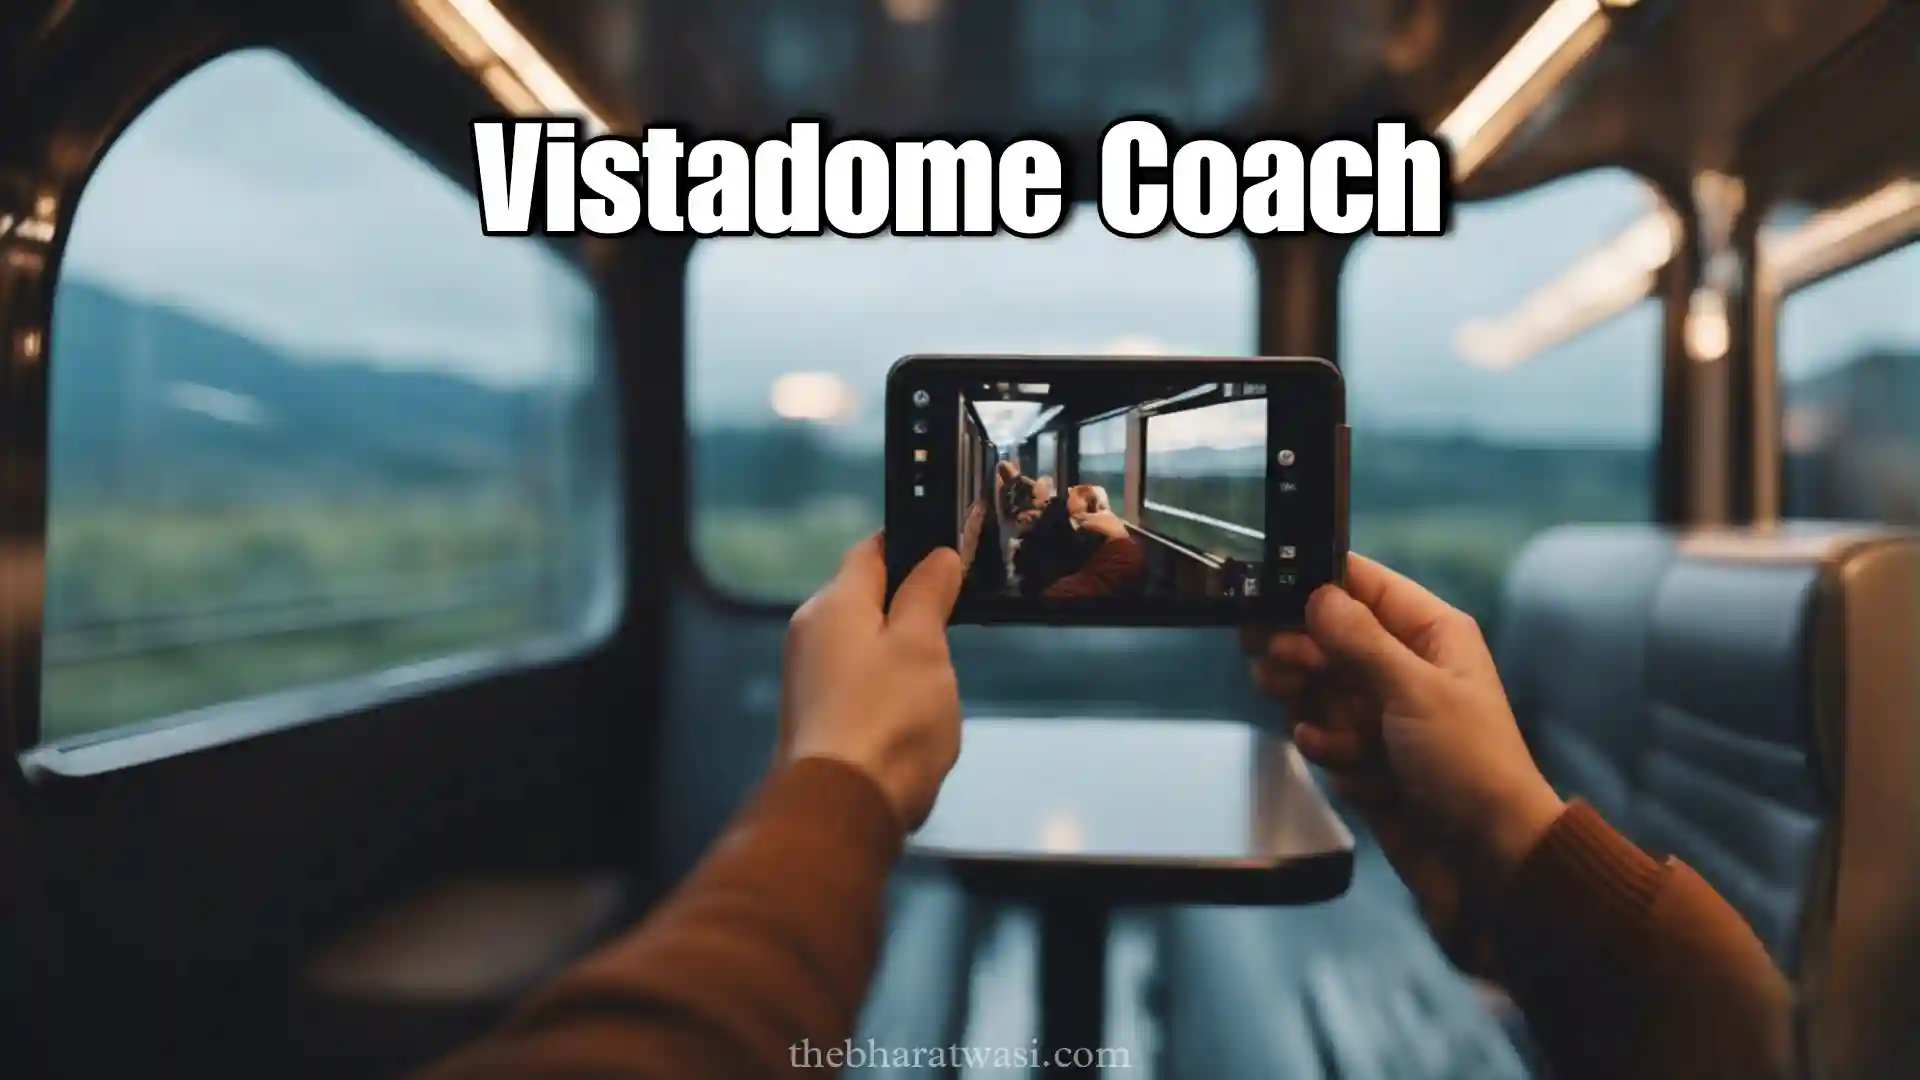 Vistadome Coach